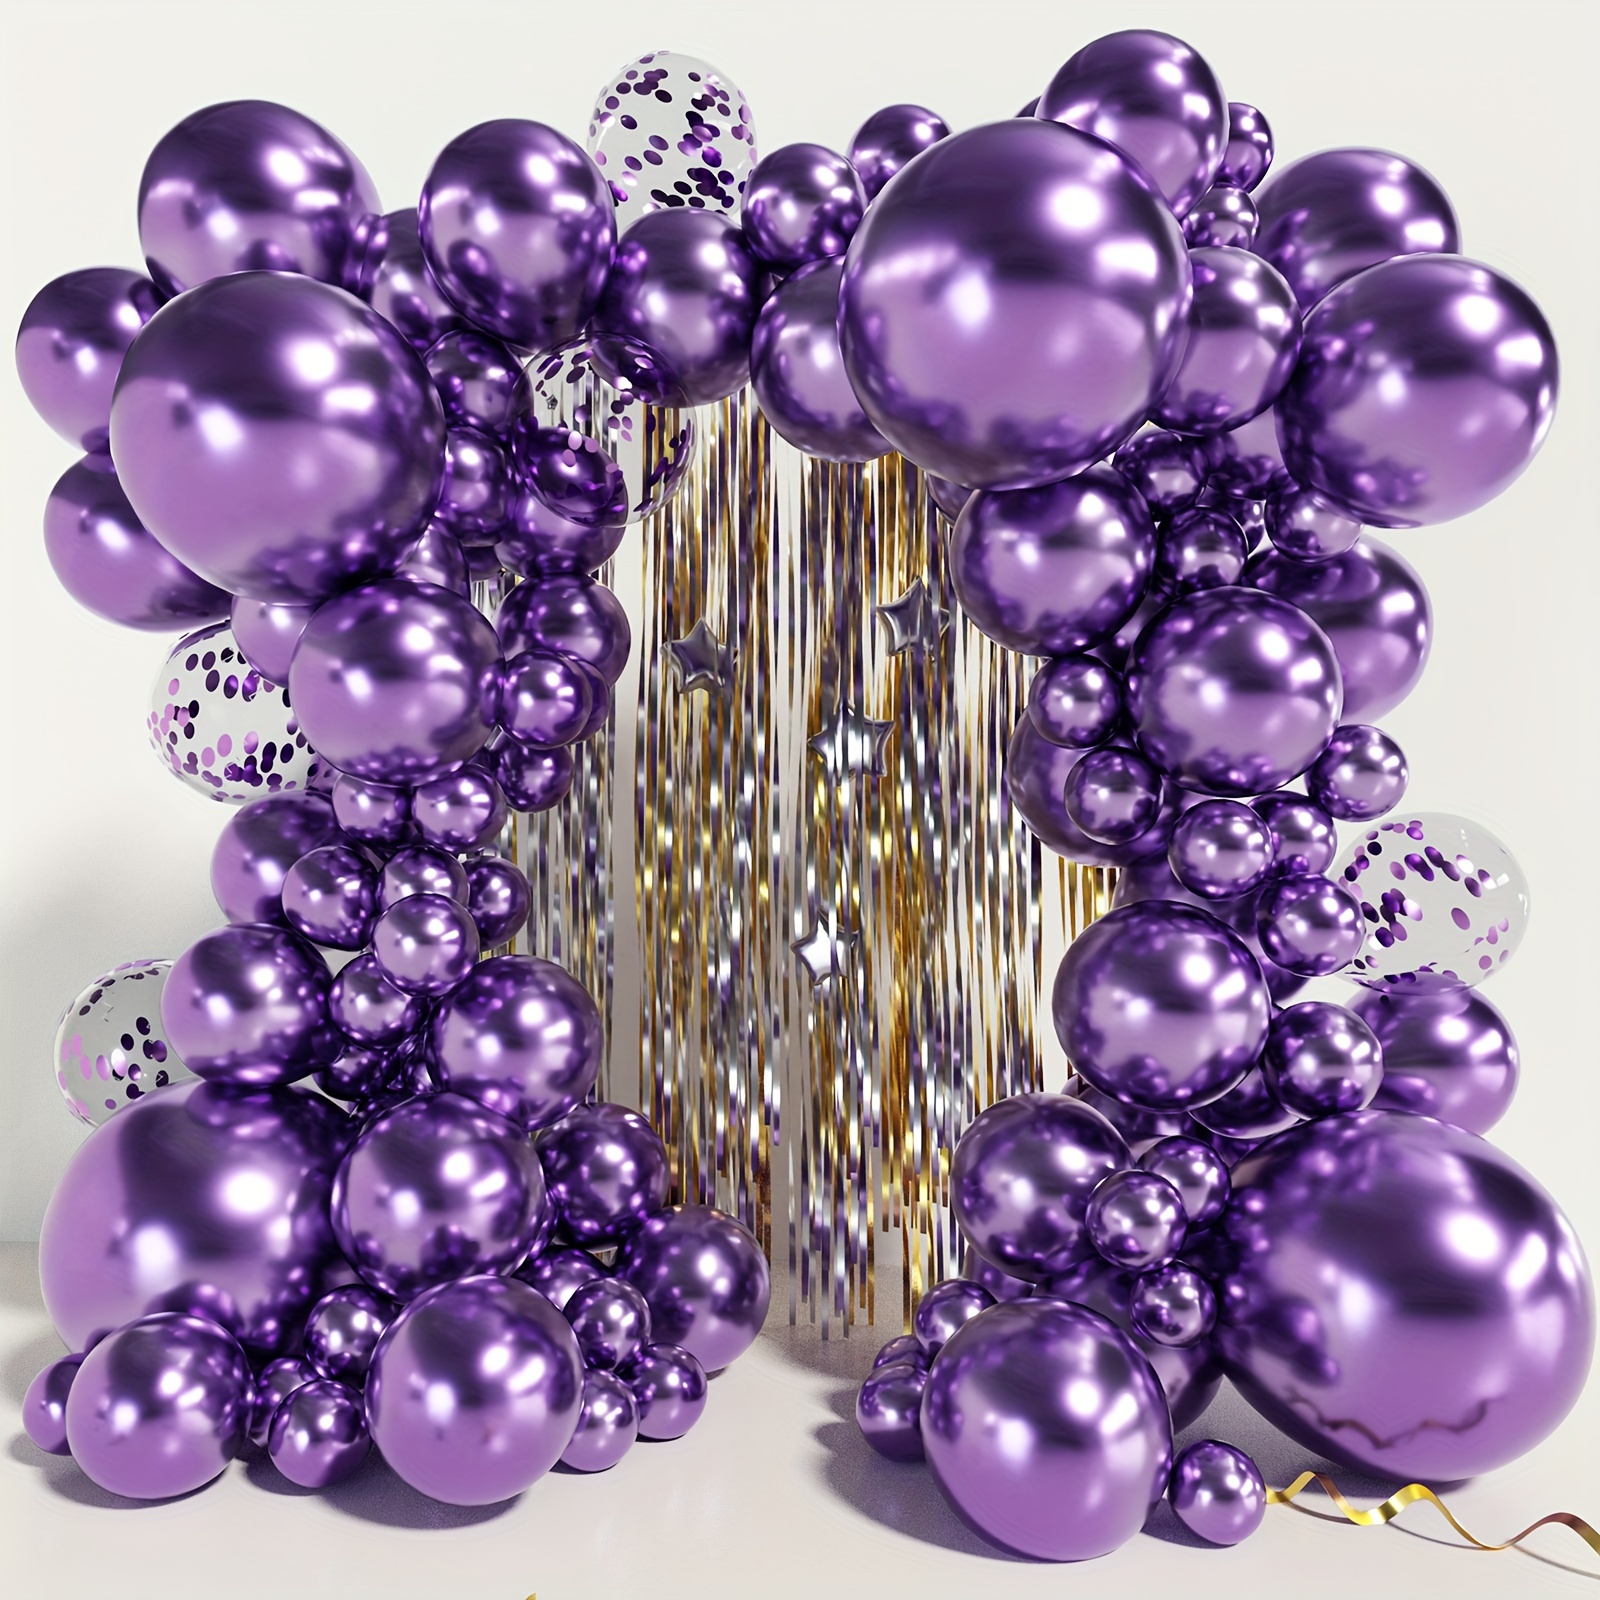 Purple 18th Birthday Decorations, Pastel Purple Balloons HAPPY BIRTHDAY  Banner